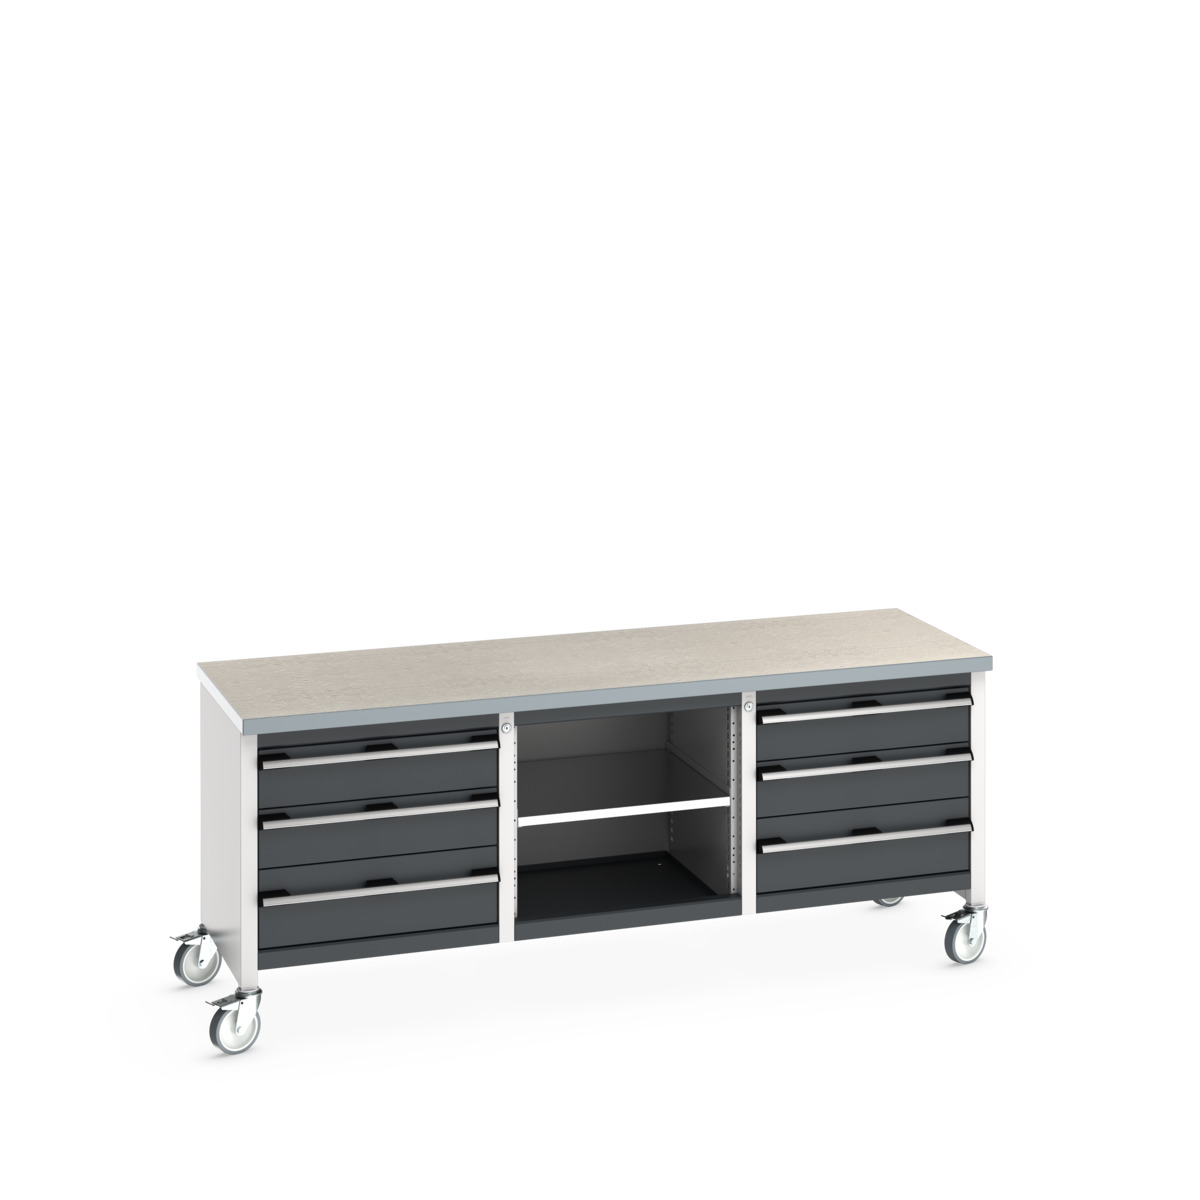 41002132. - cubio mobile storage bench (lino)